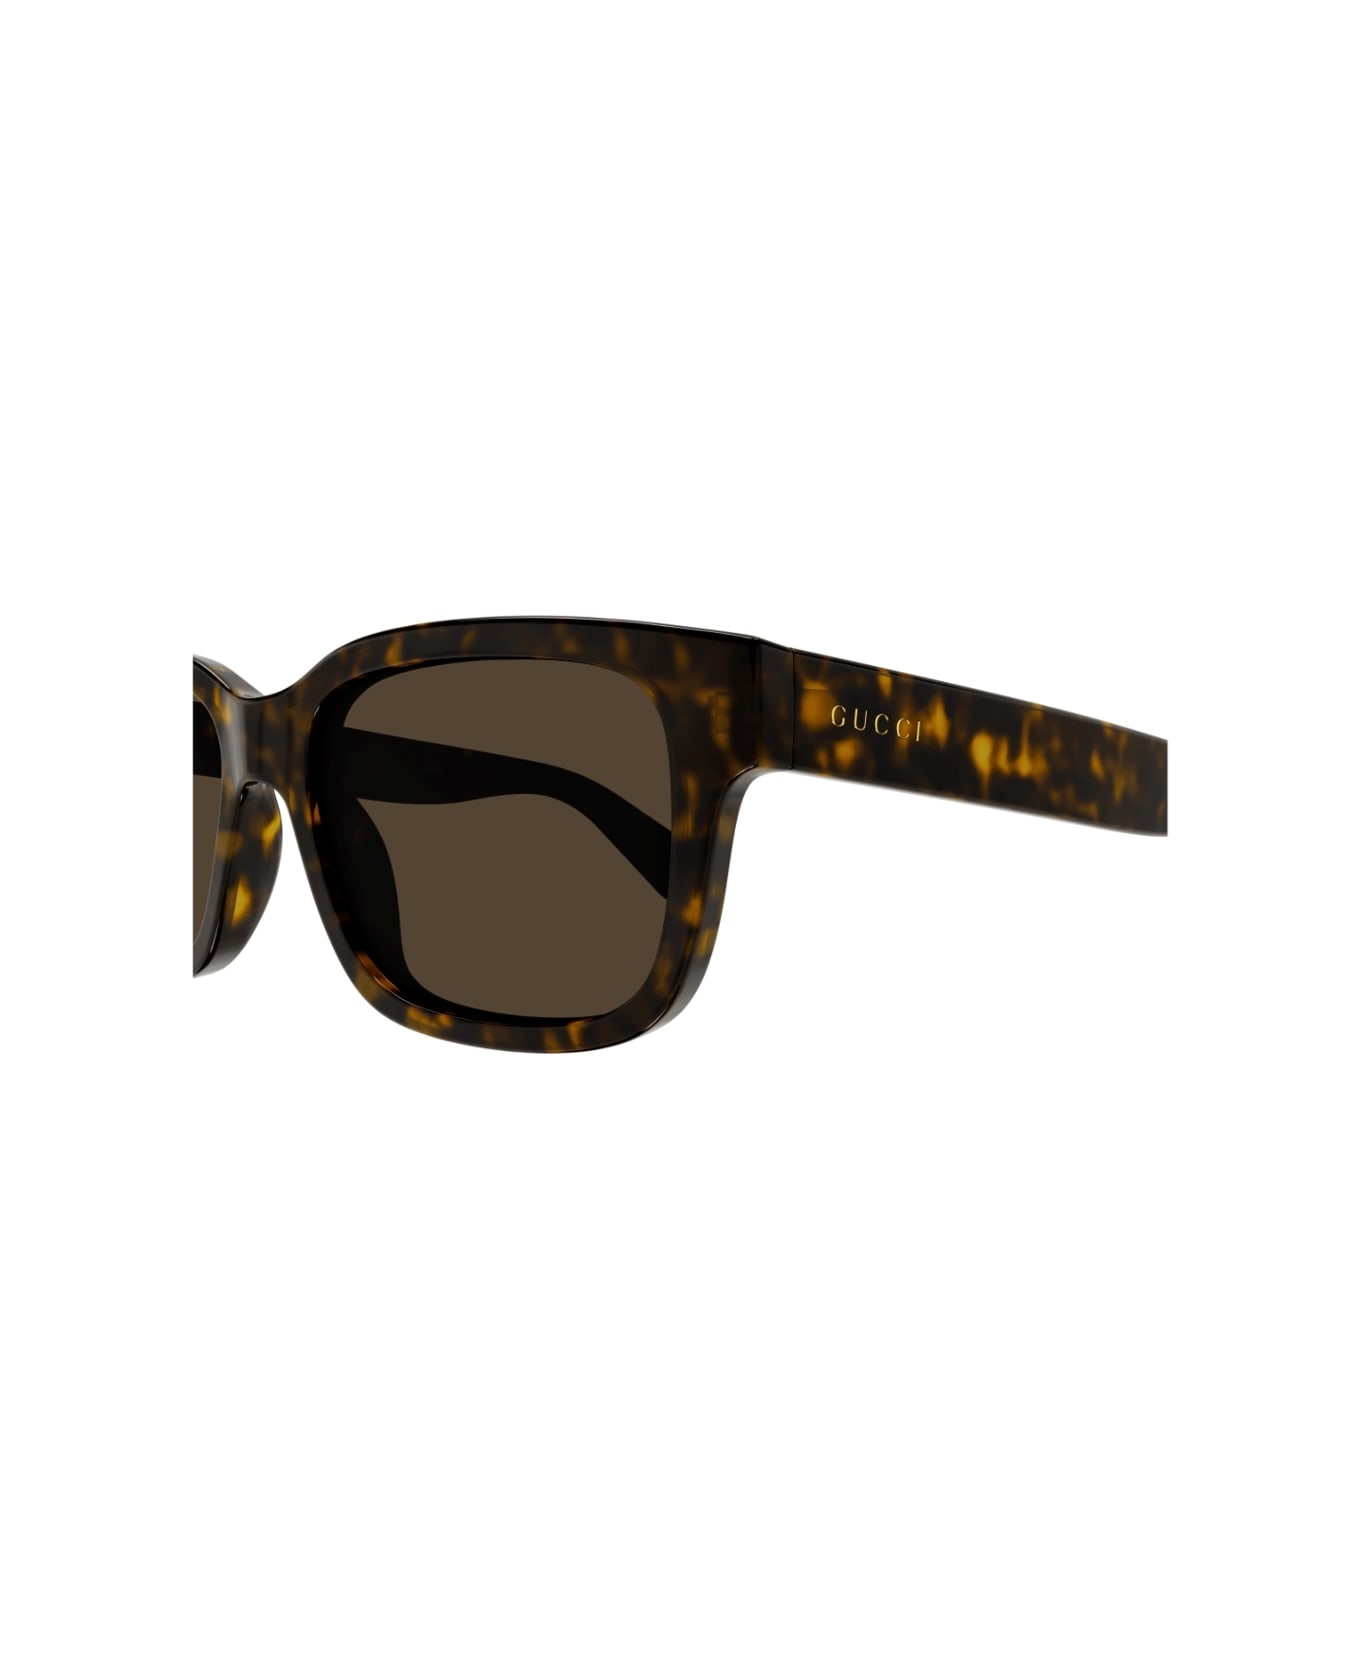 Gucci Eyewear GG1583s 002 Sunglasses